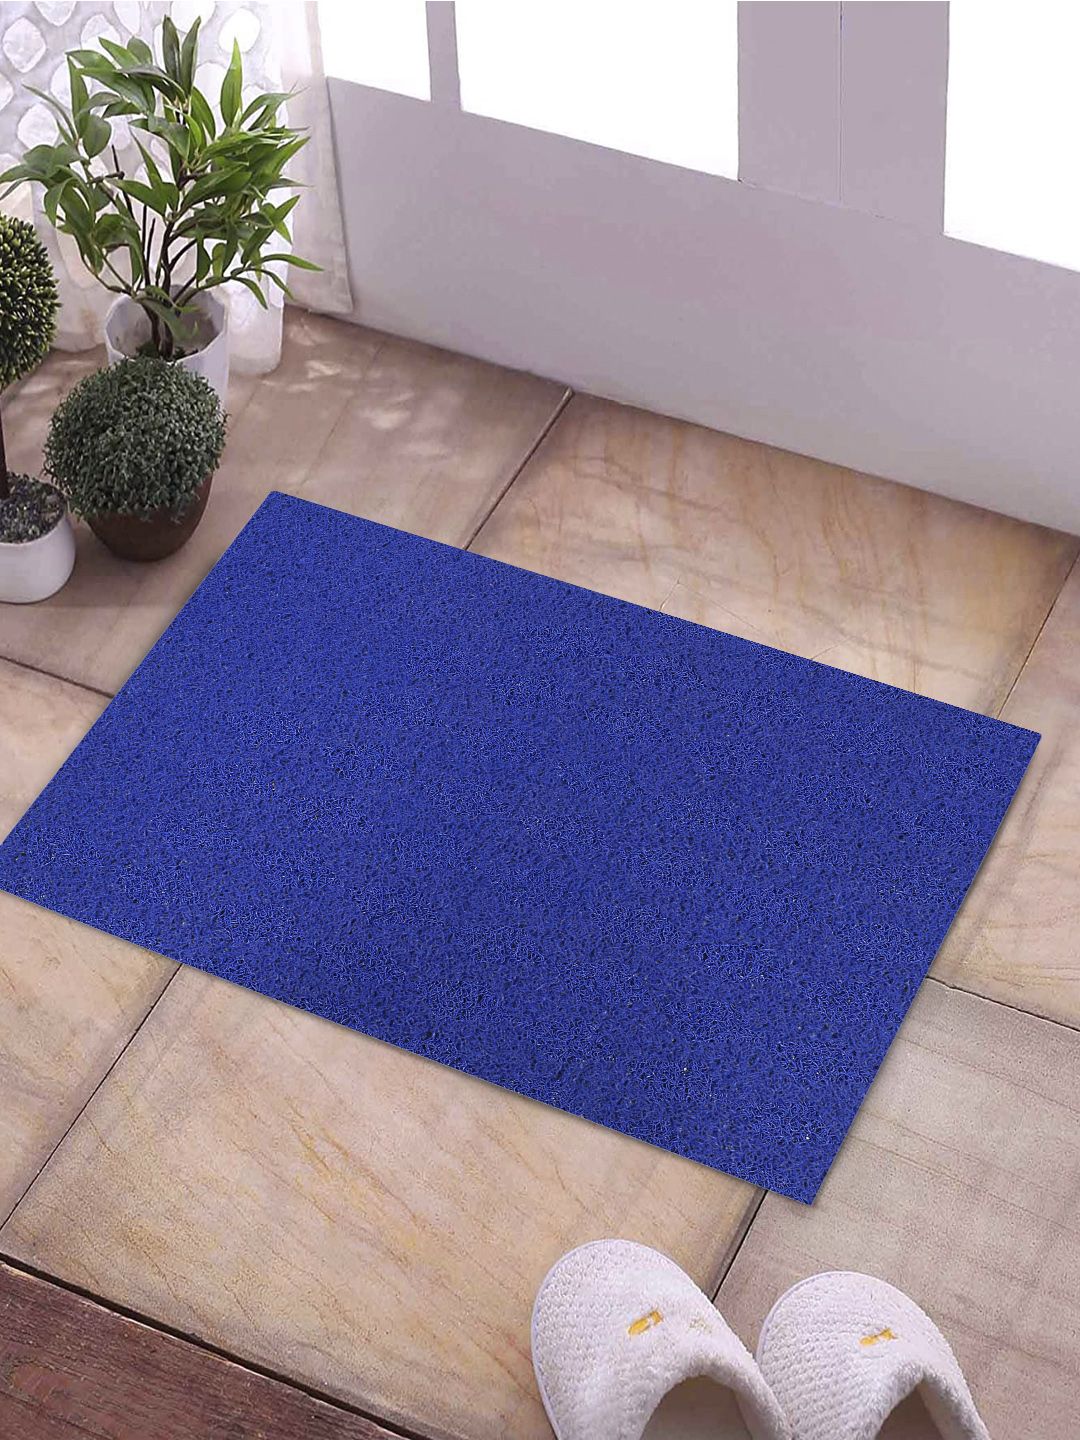 Kuber Industries Blue Solid Rubber Anti-Skid Doormat Price in India